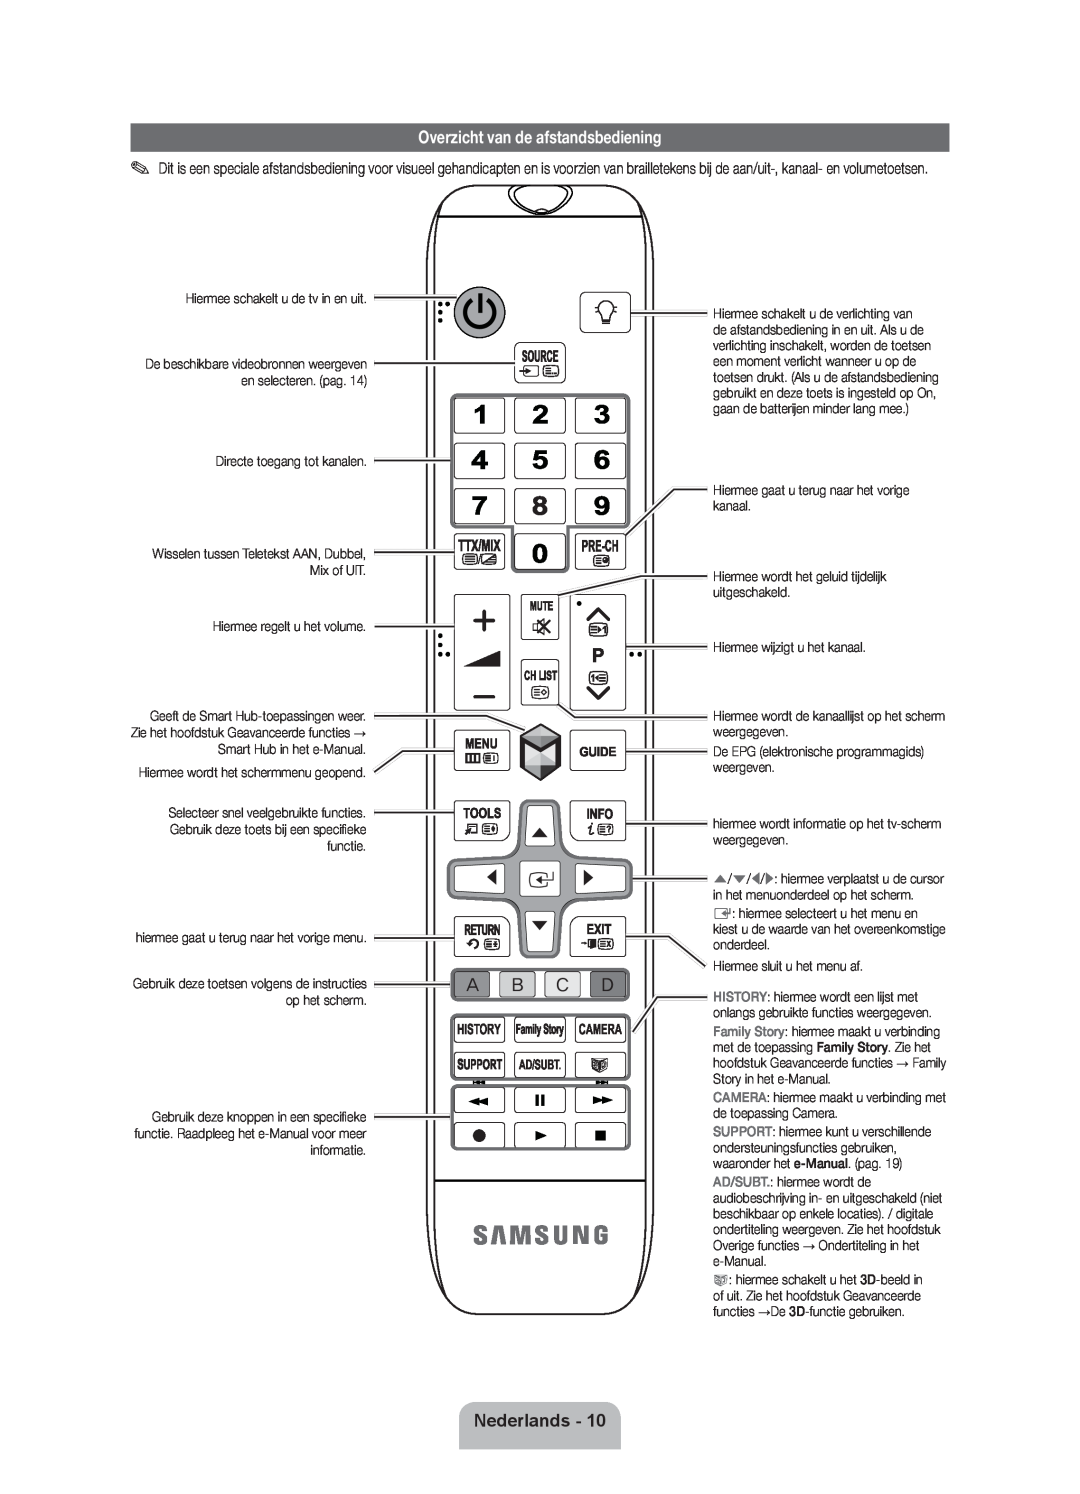 Samsung UE40ES7000SXXH, UE46D7090LSXZG manual Overzicht van de afstandsbediening, Nederlands, Camera, History, Ad/Subt 